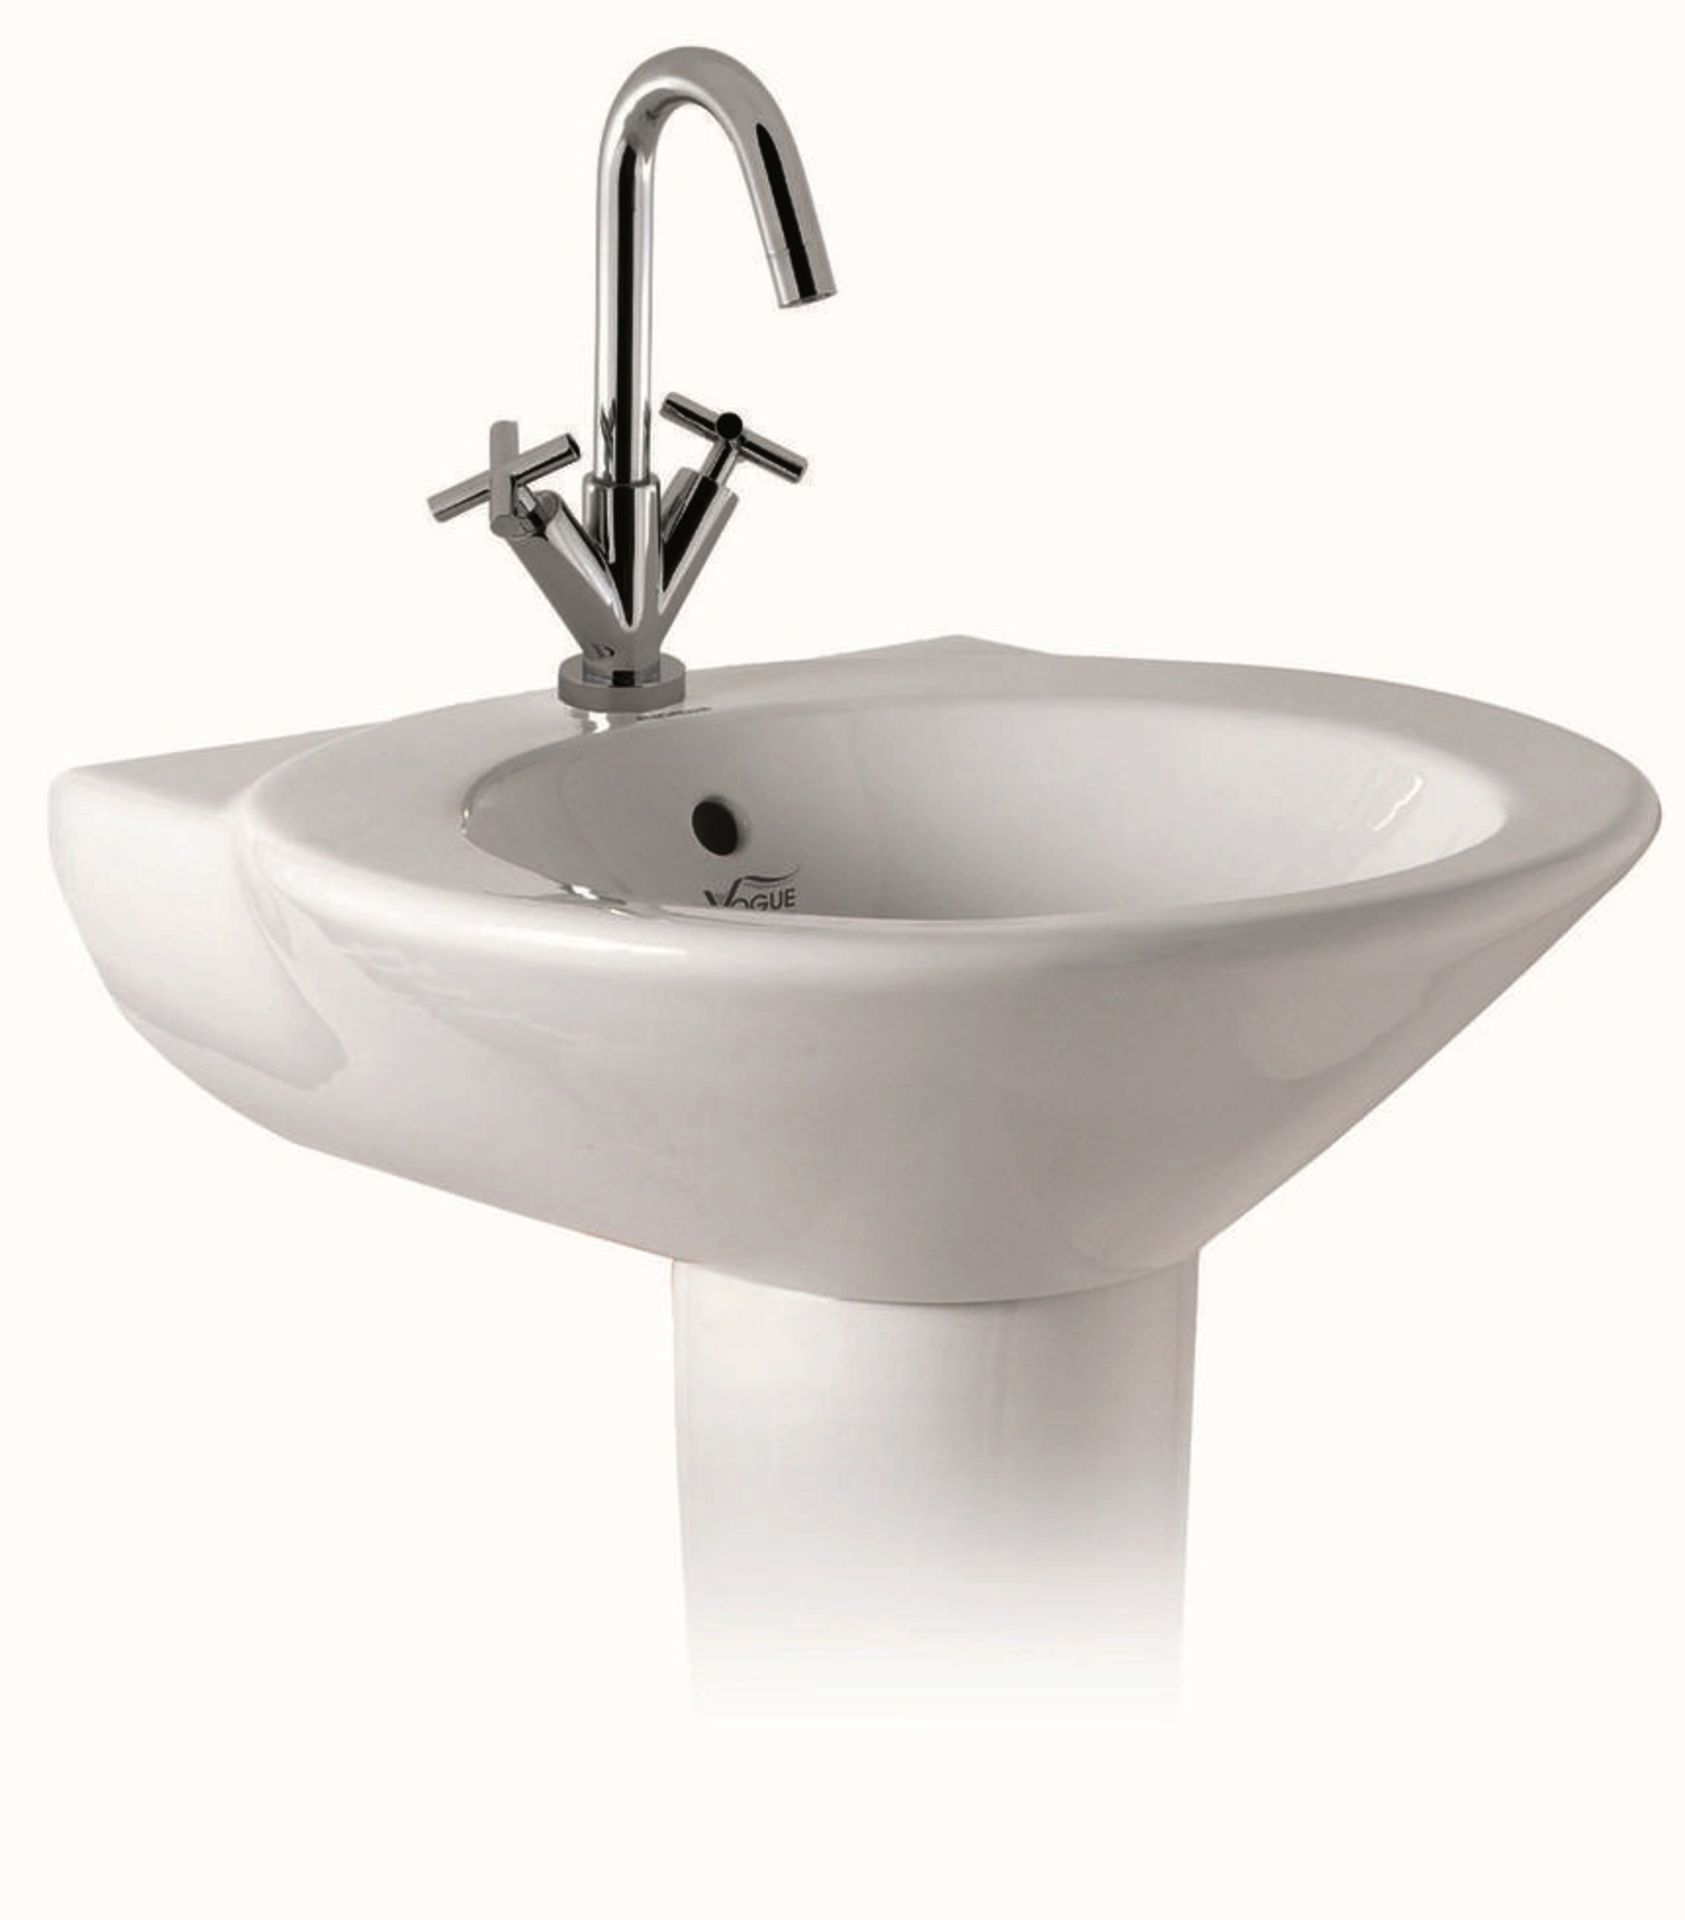 10 x Vogue Bathrooms TEFELI Single Tap Hole Bathroom SINK BASINS with Pedestals - 550mm Width -